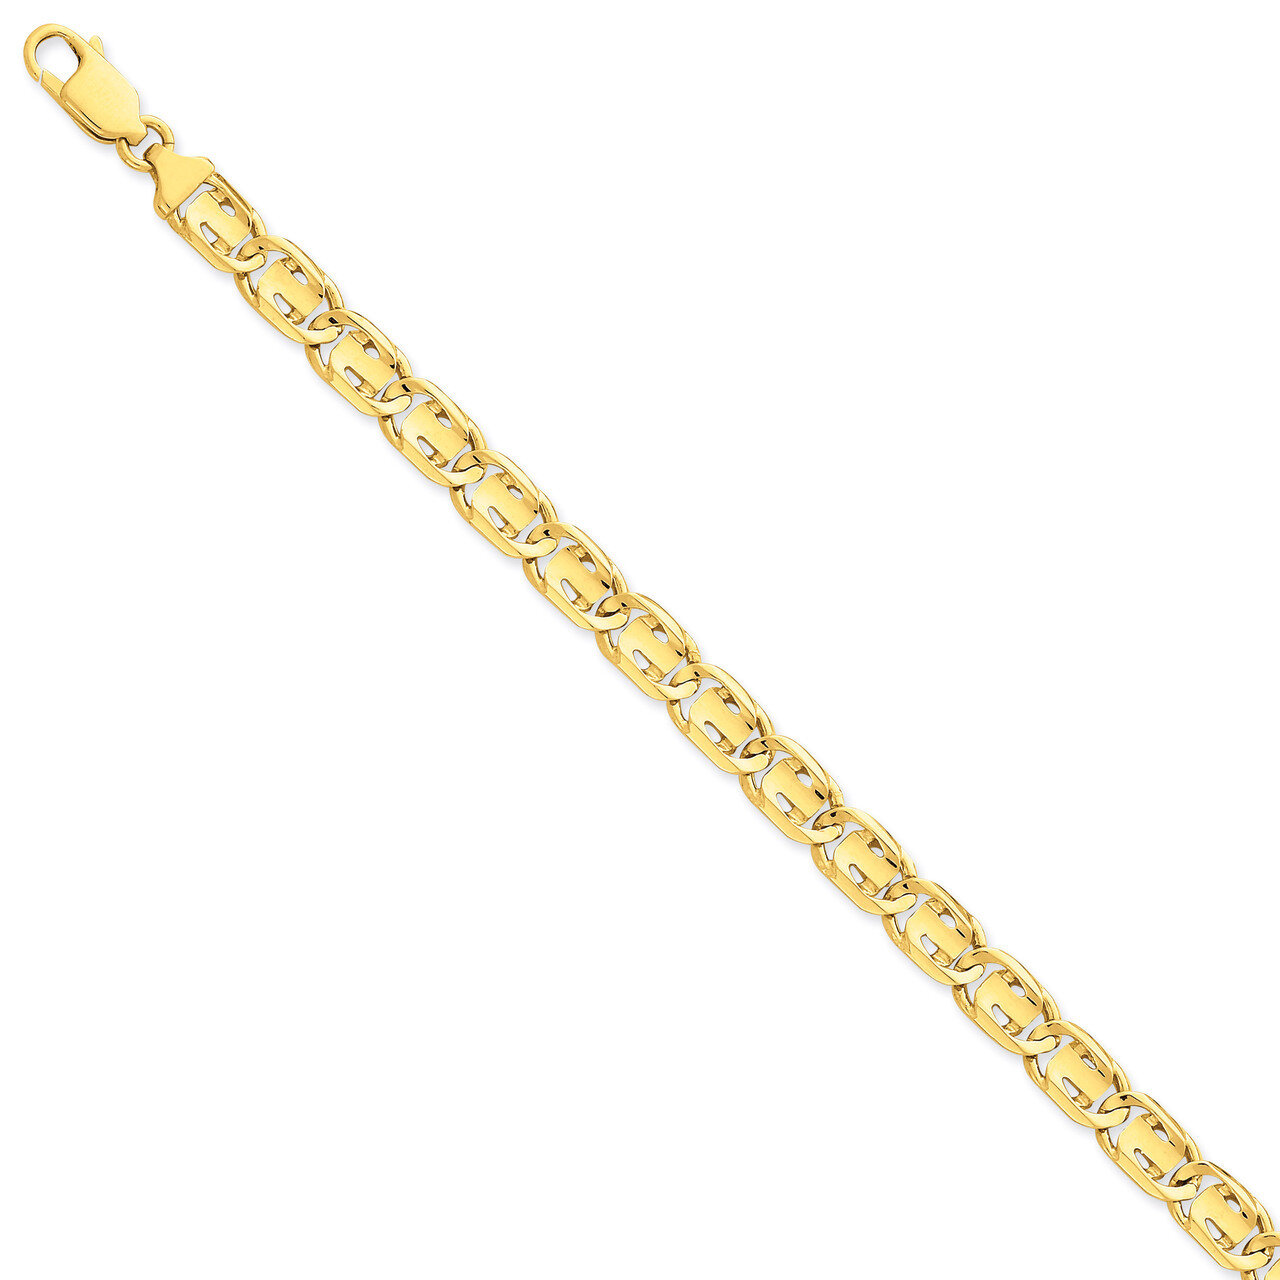 7mm Hand-Polished Fancy Link Chain 18 Inch 14k Gold LK200-18